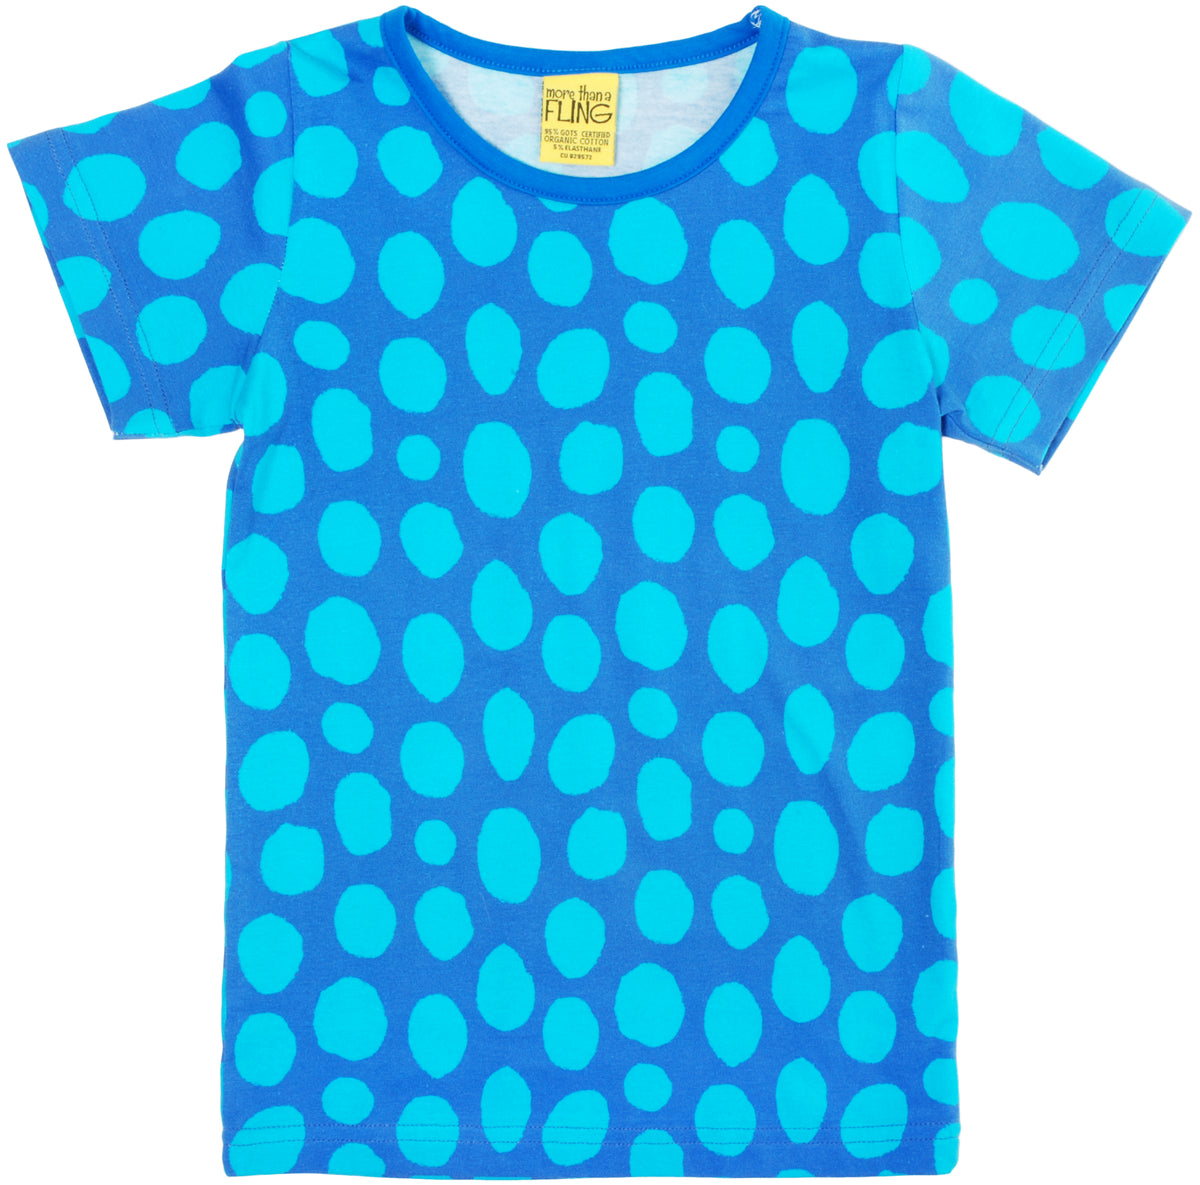 More Than A Fling T Shirt Blue Turquoise Dots - Blauw Shirt Turquoise Bollen